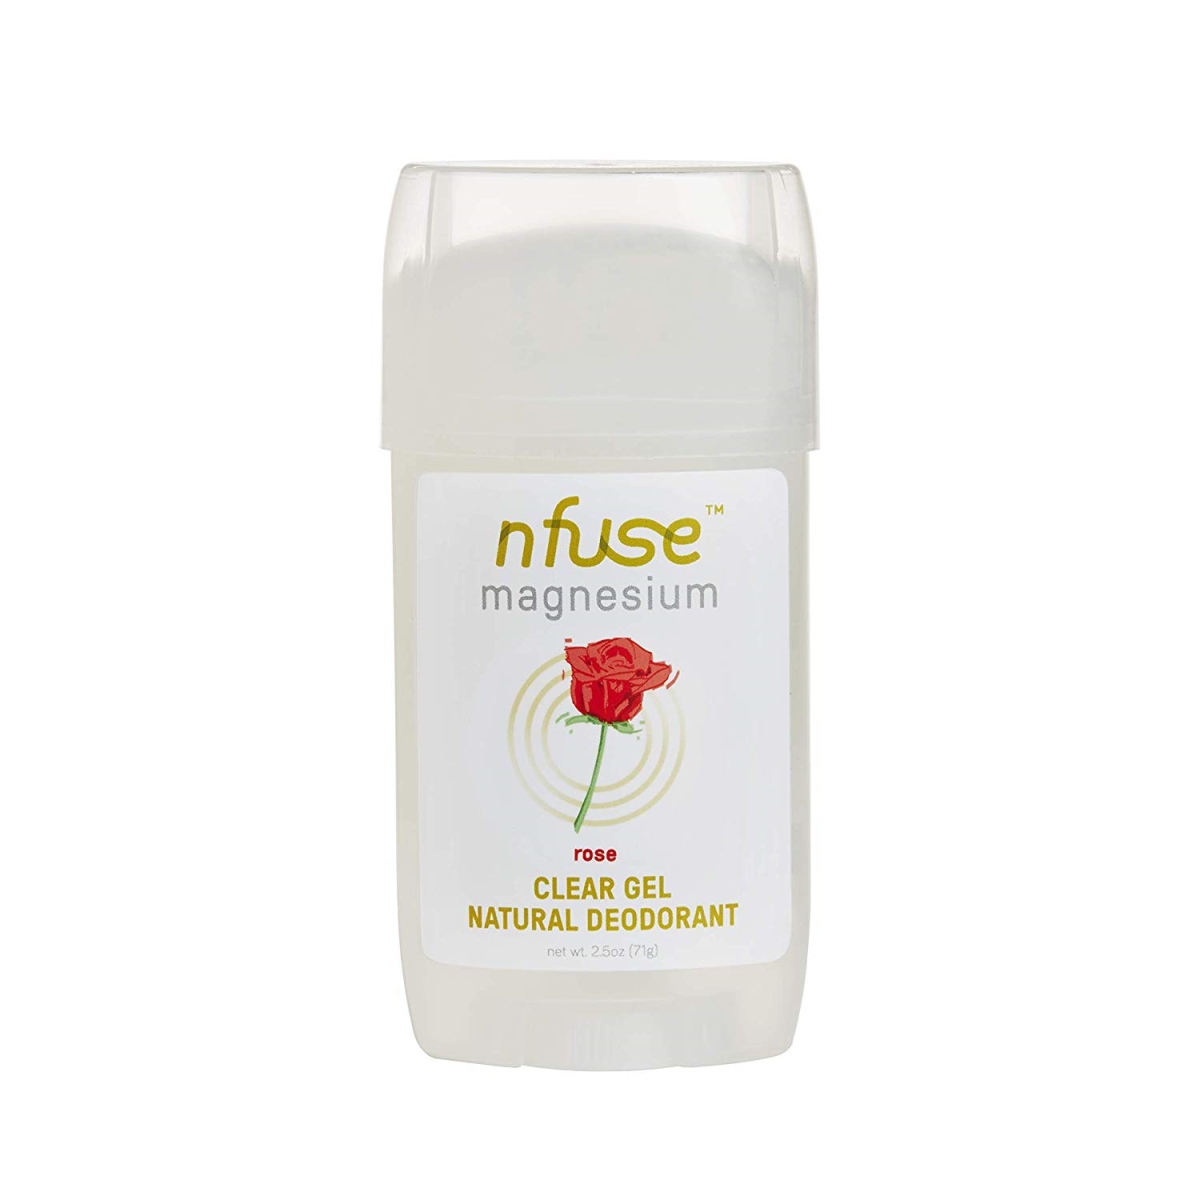 242131 2.5 Oz Magnesium Natural Clear Gel Deodorant, Rose